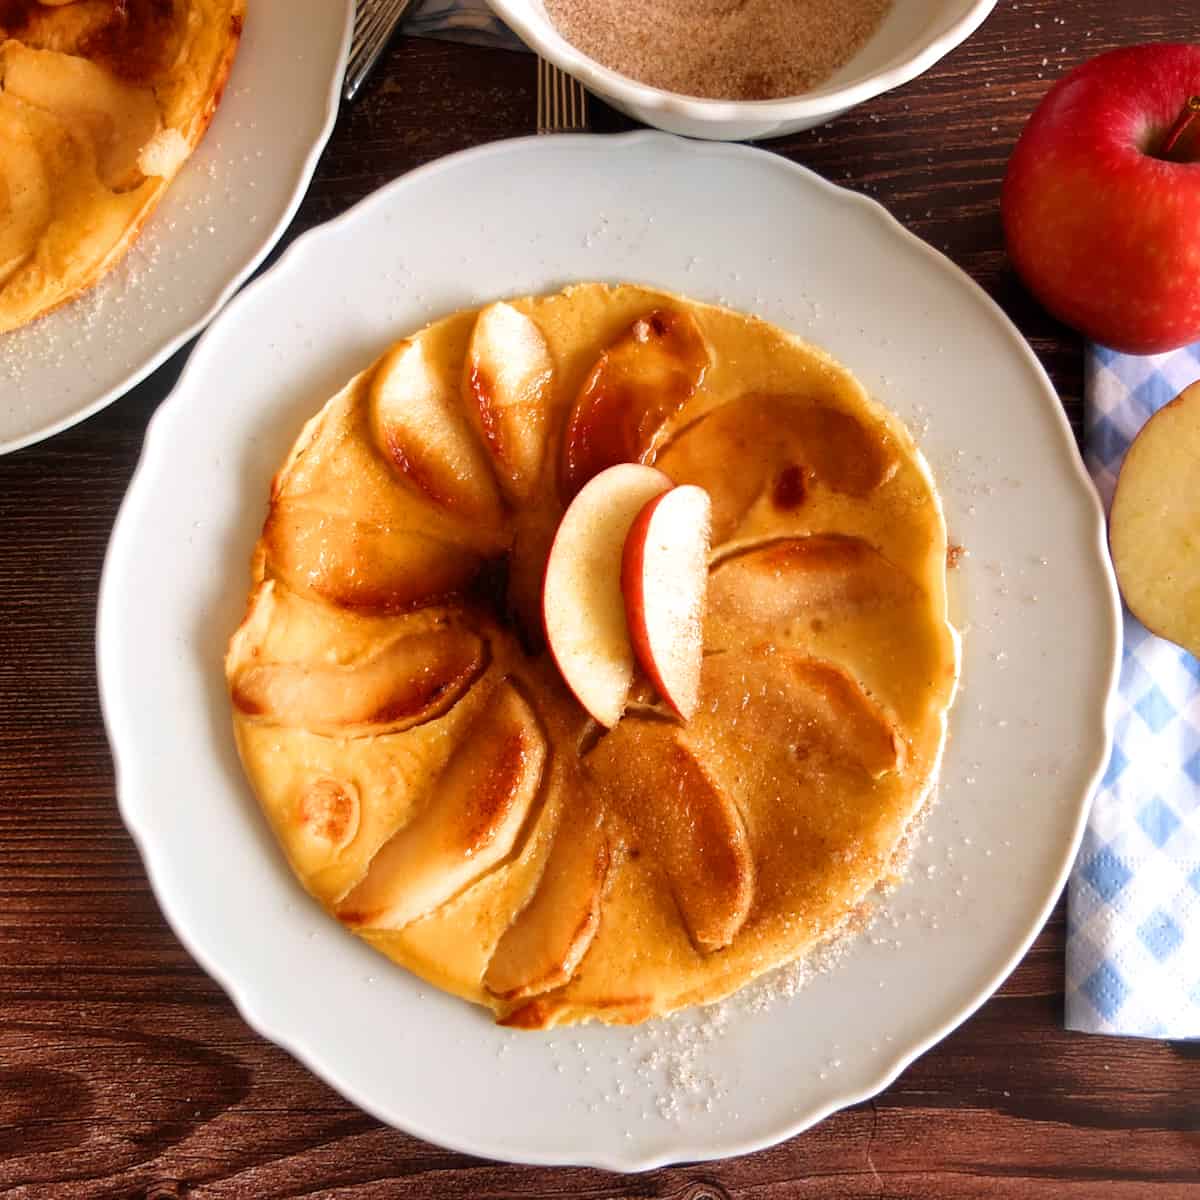 Apfelpfannkuchen Recipe (German Apple Pancakes) - Fulffy and Crunchy